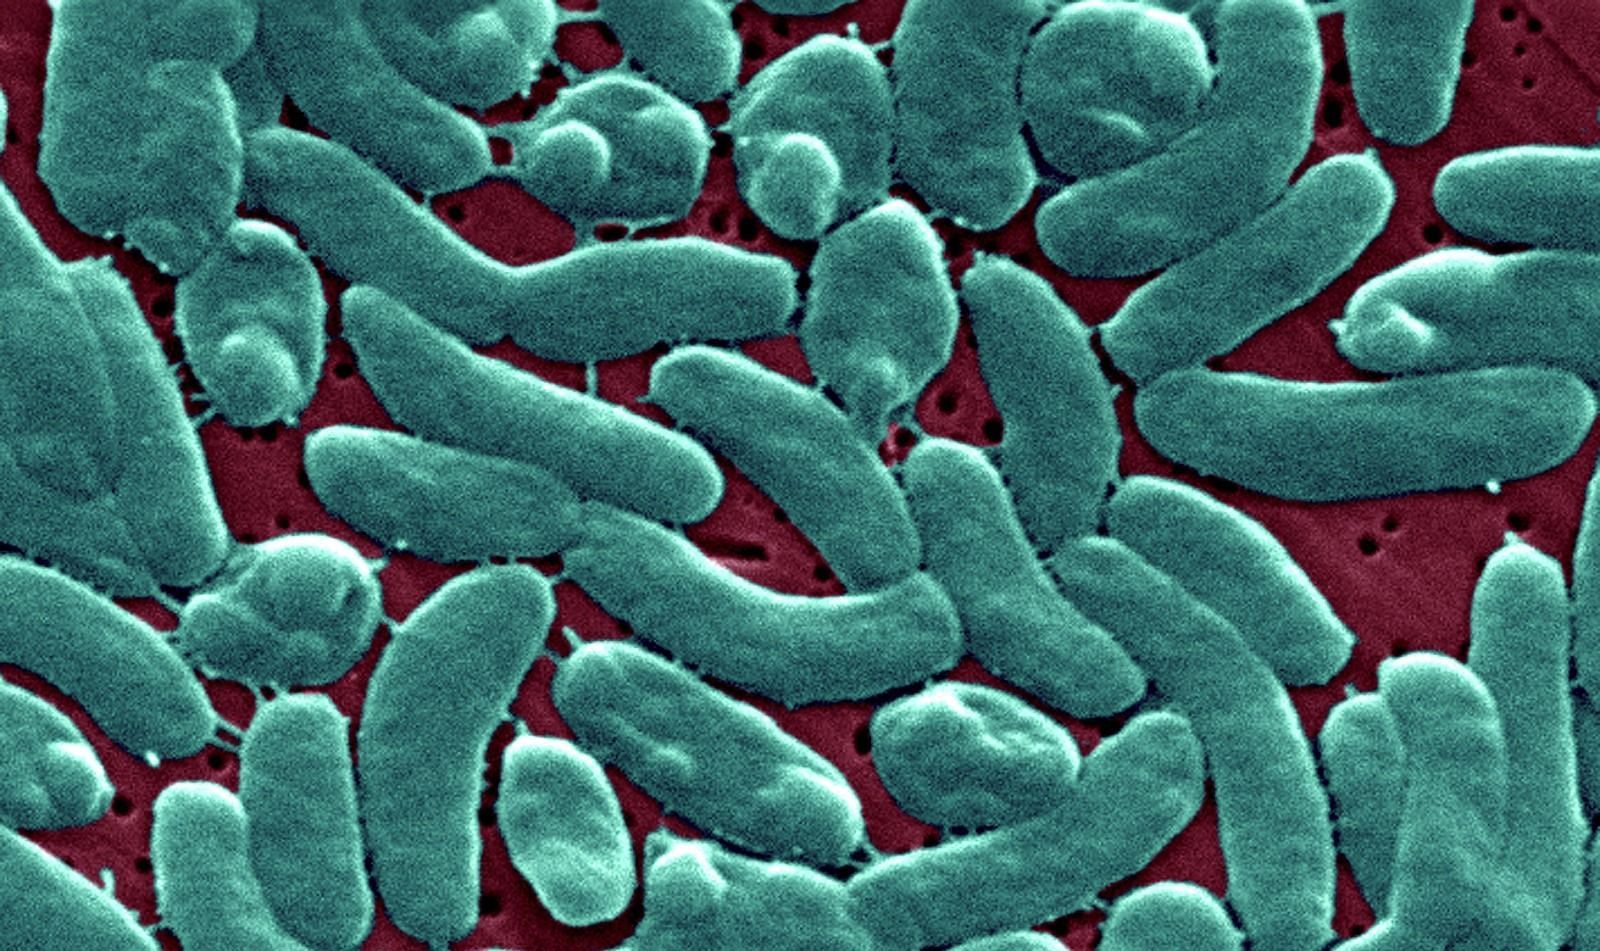 Vibrio vulnificus (Image via CNN)